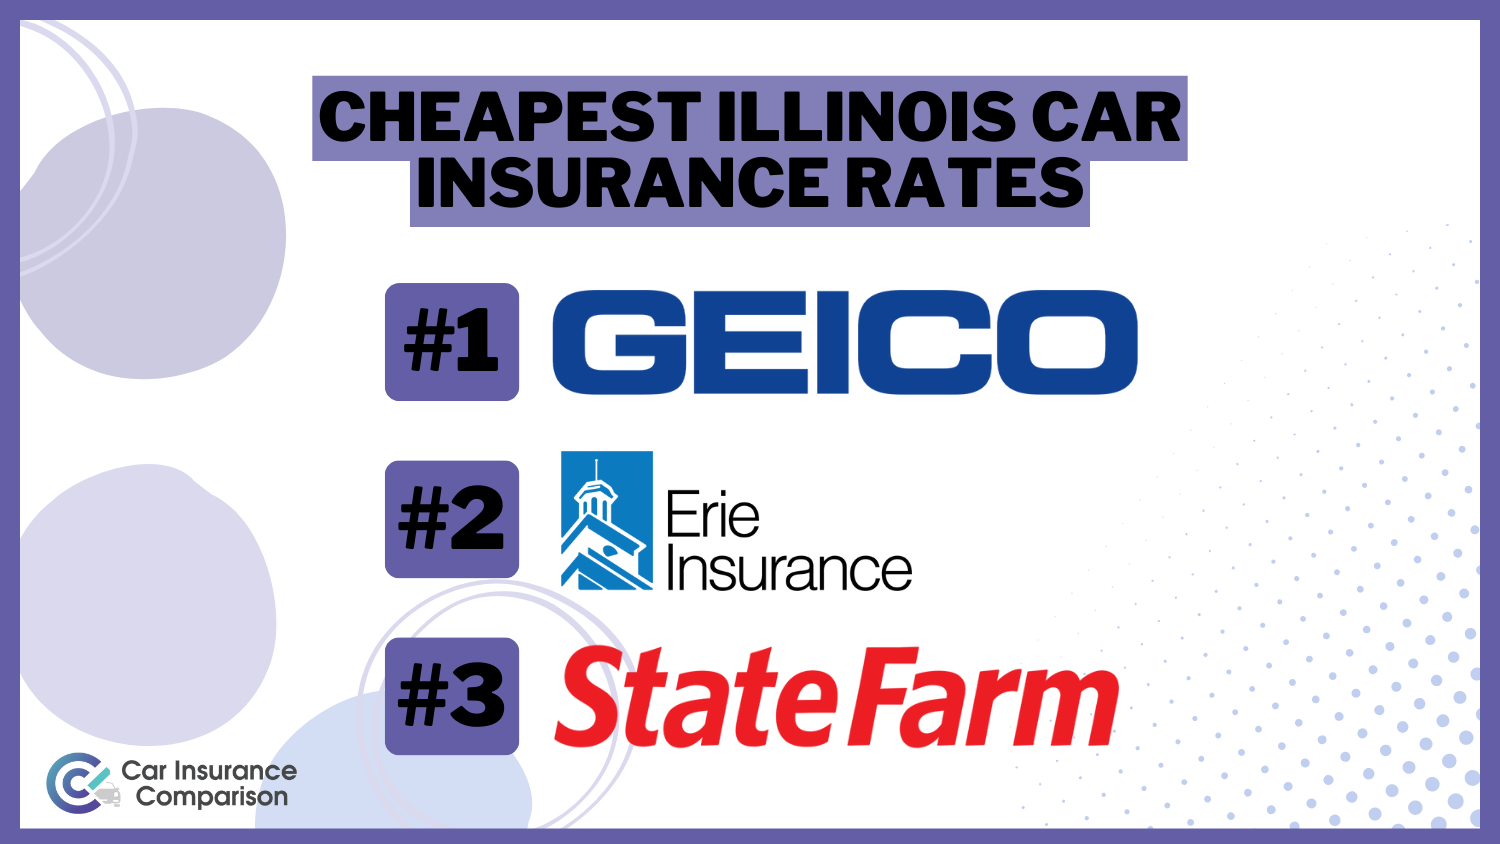 Cheapest Illinois Car Insurance Rates: Geico, Erie, State Farm